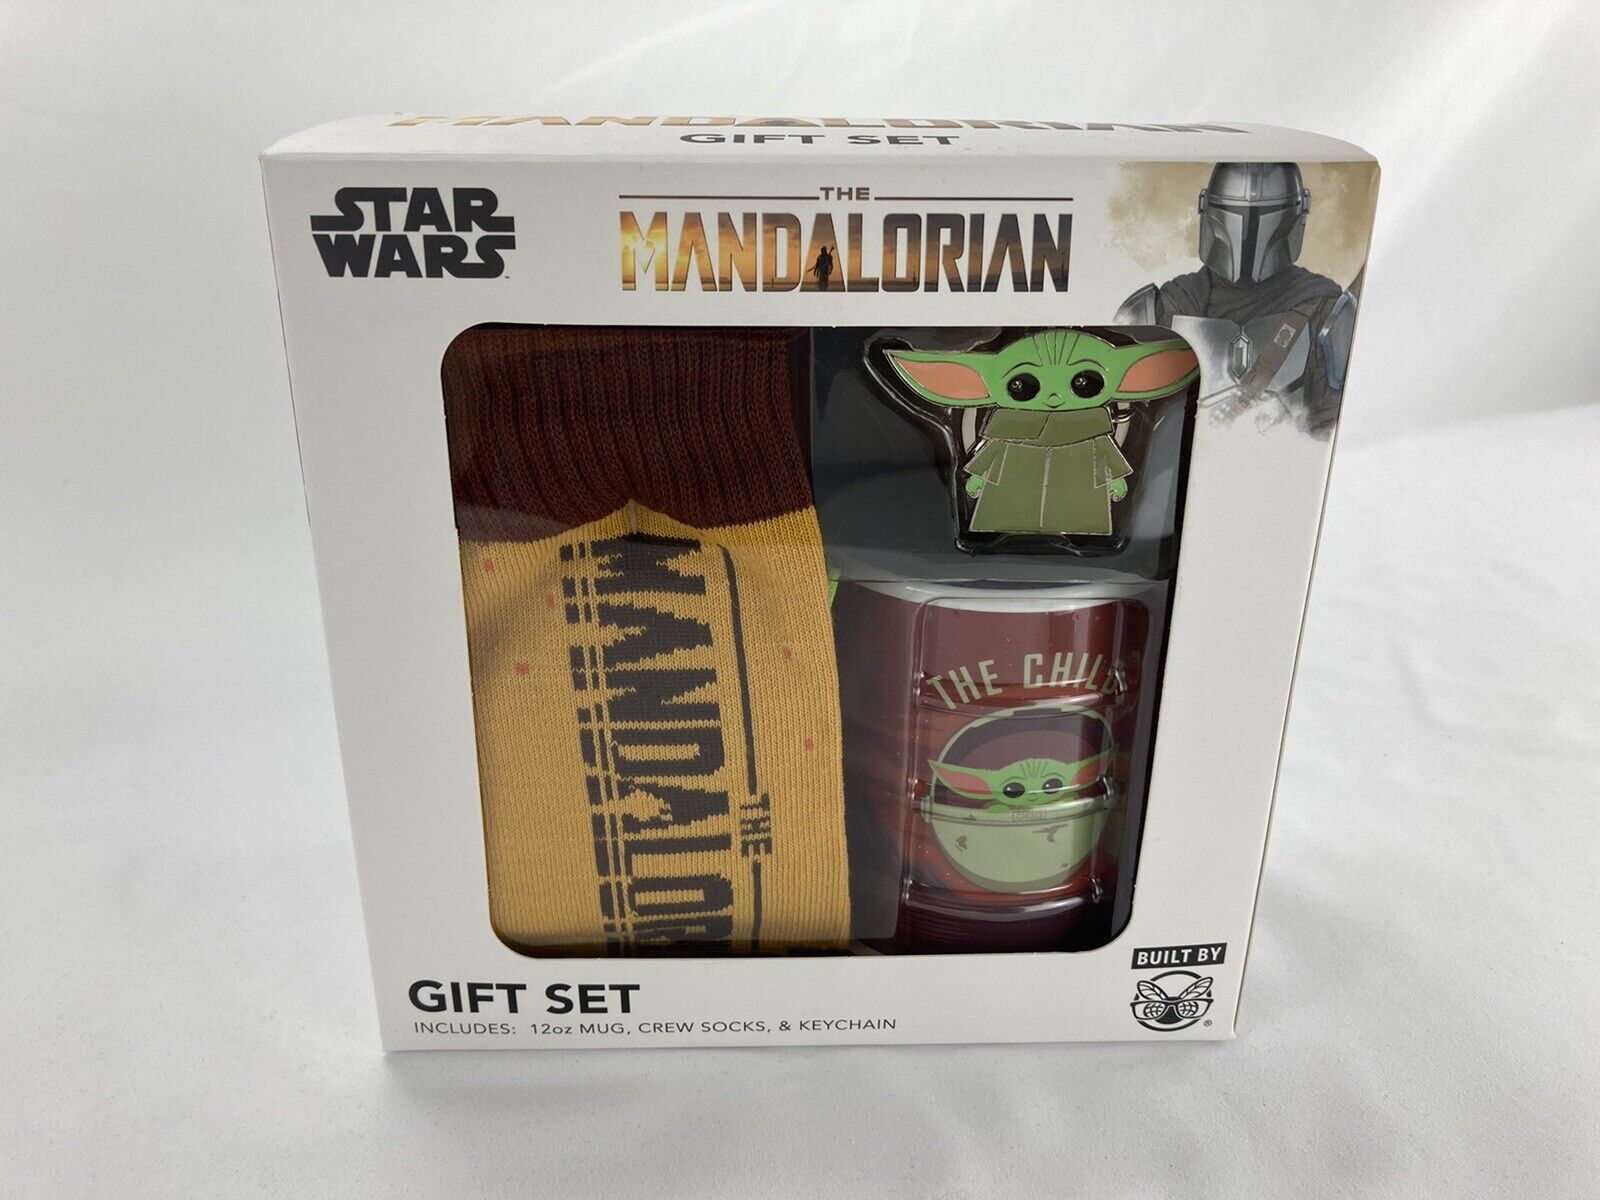 Star Wars The Mandalorian Gift Set w Mug, Crew Socks (Fits Most) & Keychain